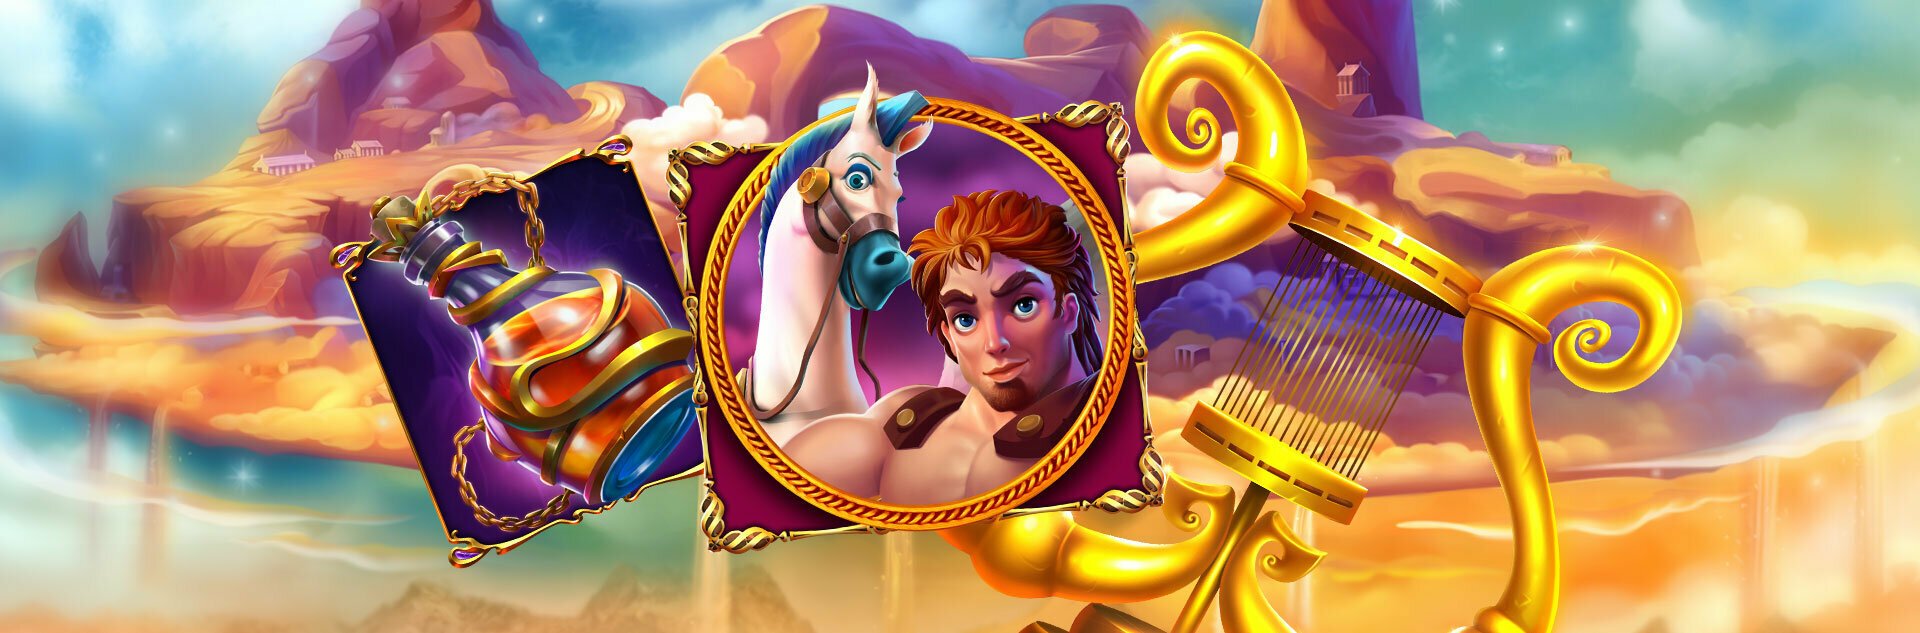 Hercules and Pegasus ™ Free Spins